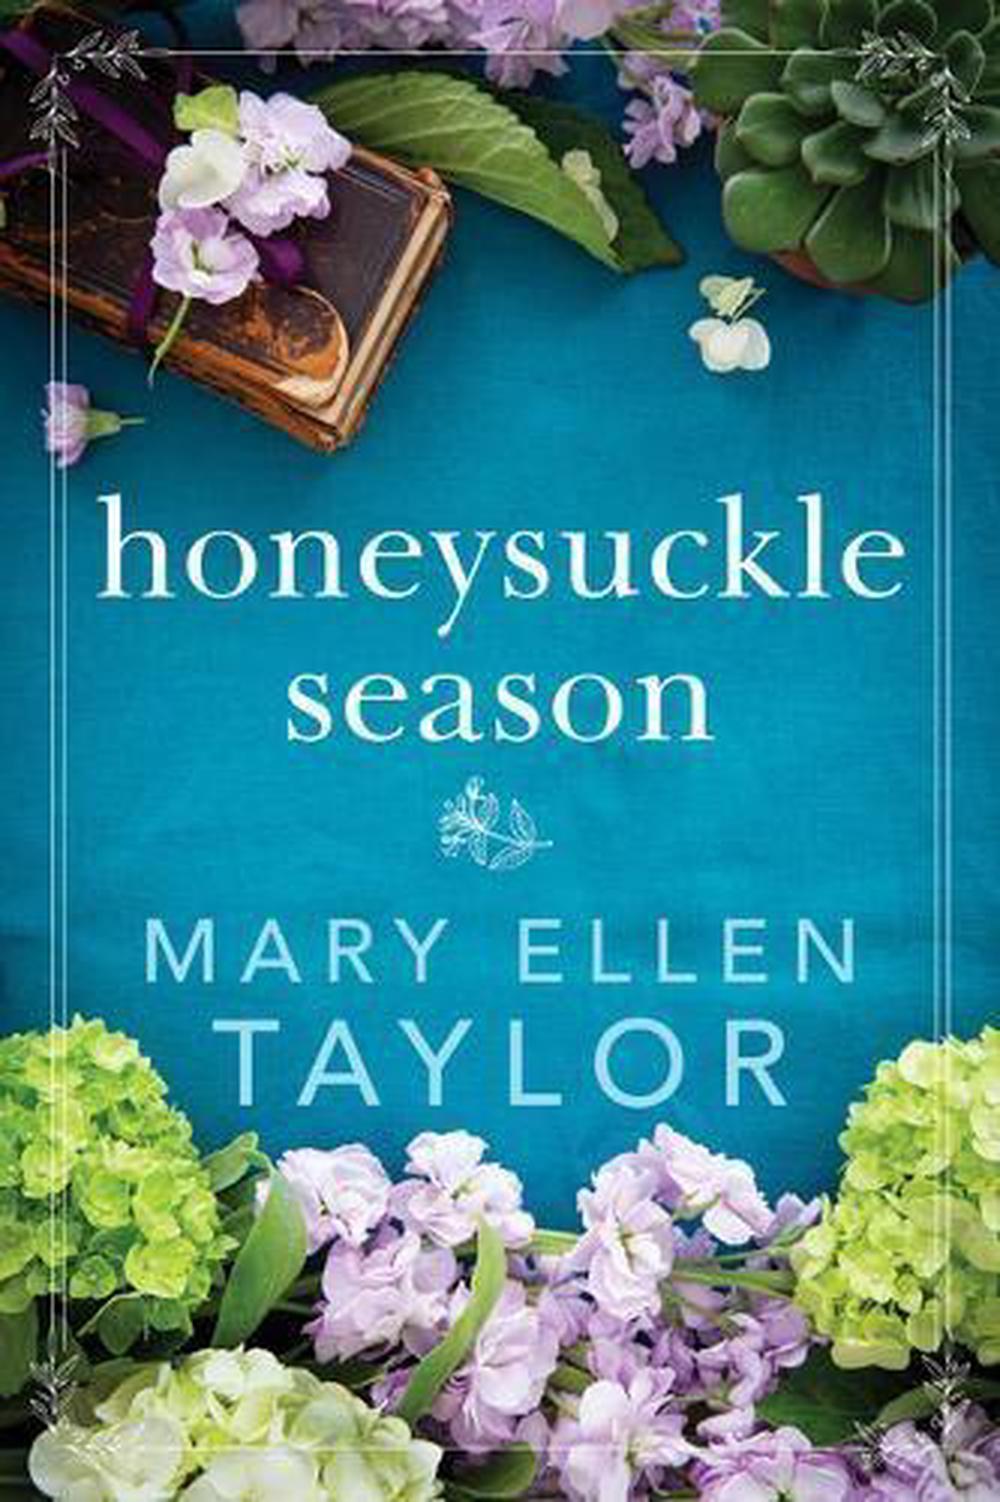 book honeysuckle season